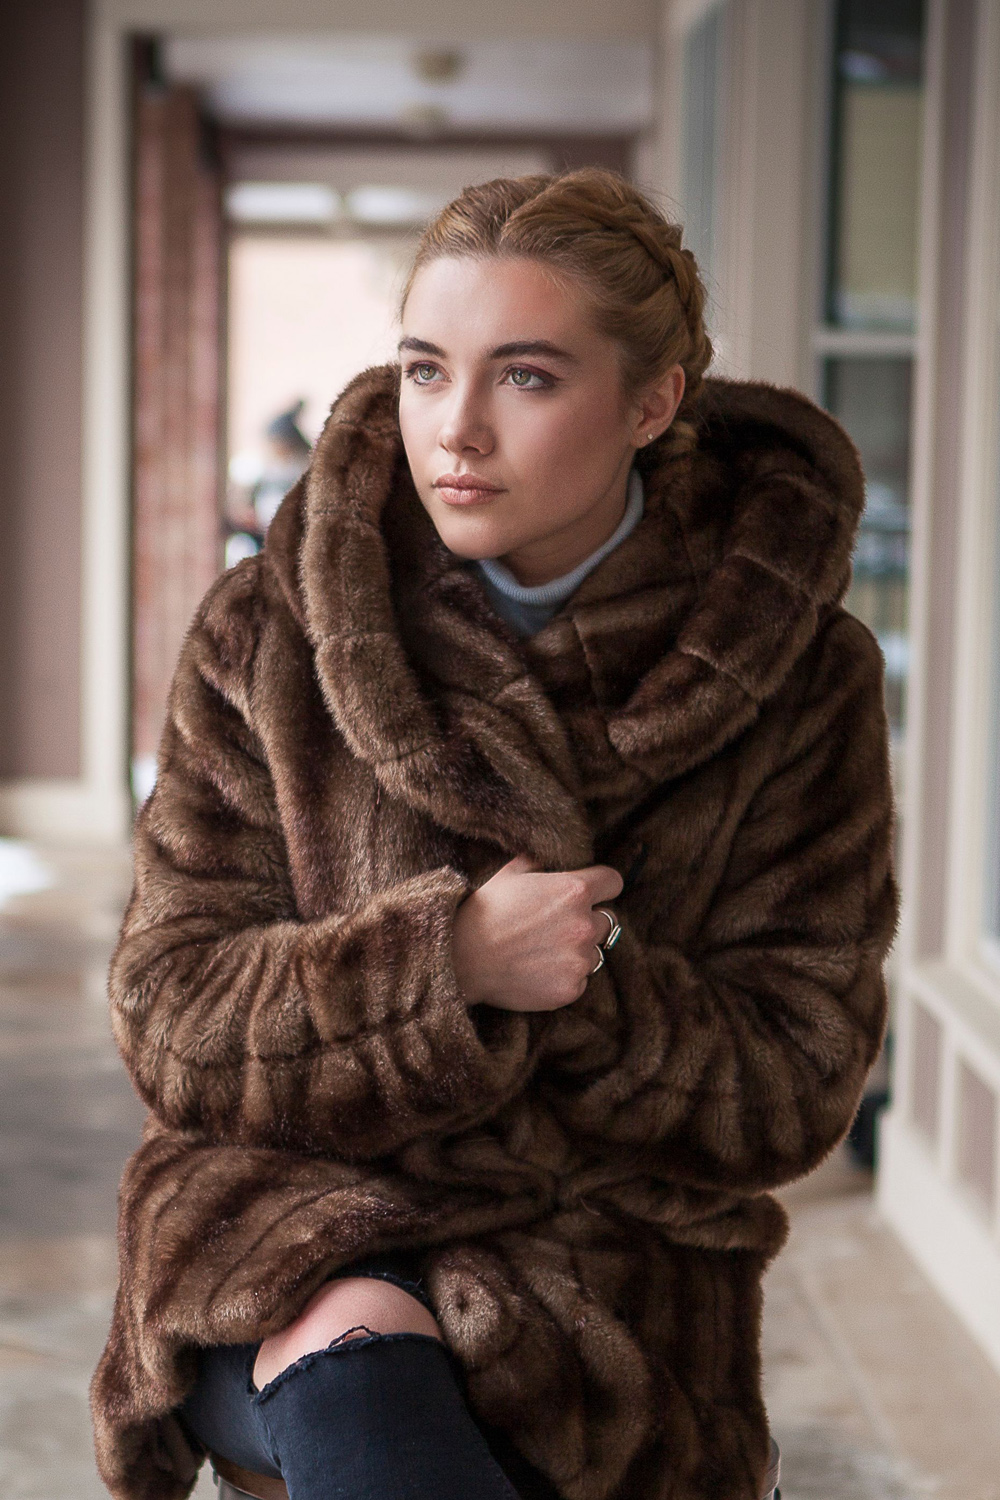 Florence Pugh Women Actress Green Eyes Depth Of Field Torn Clothes Fur Coats Fur Coats Brown Coat Lo 1000x1500